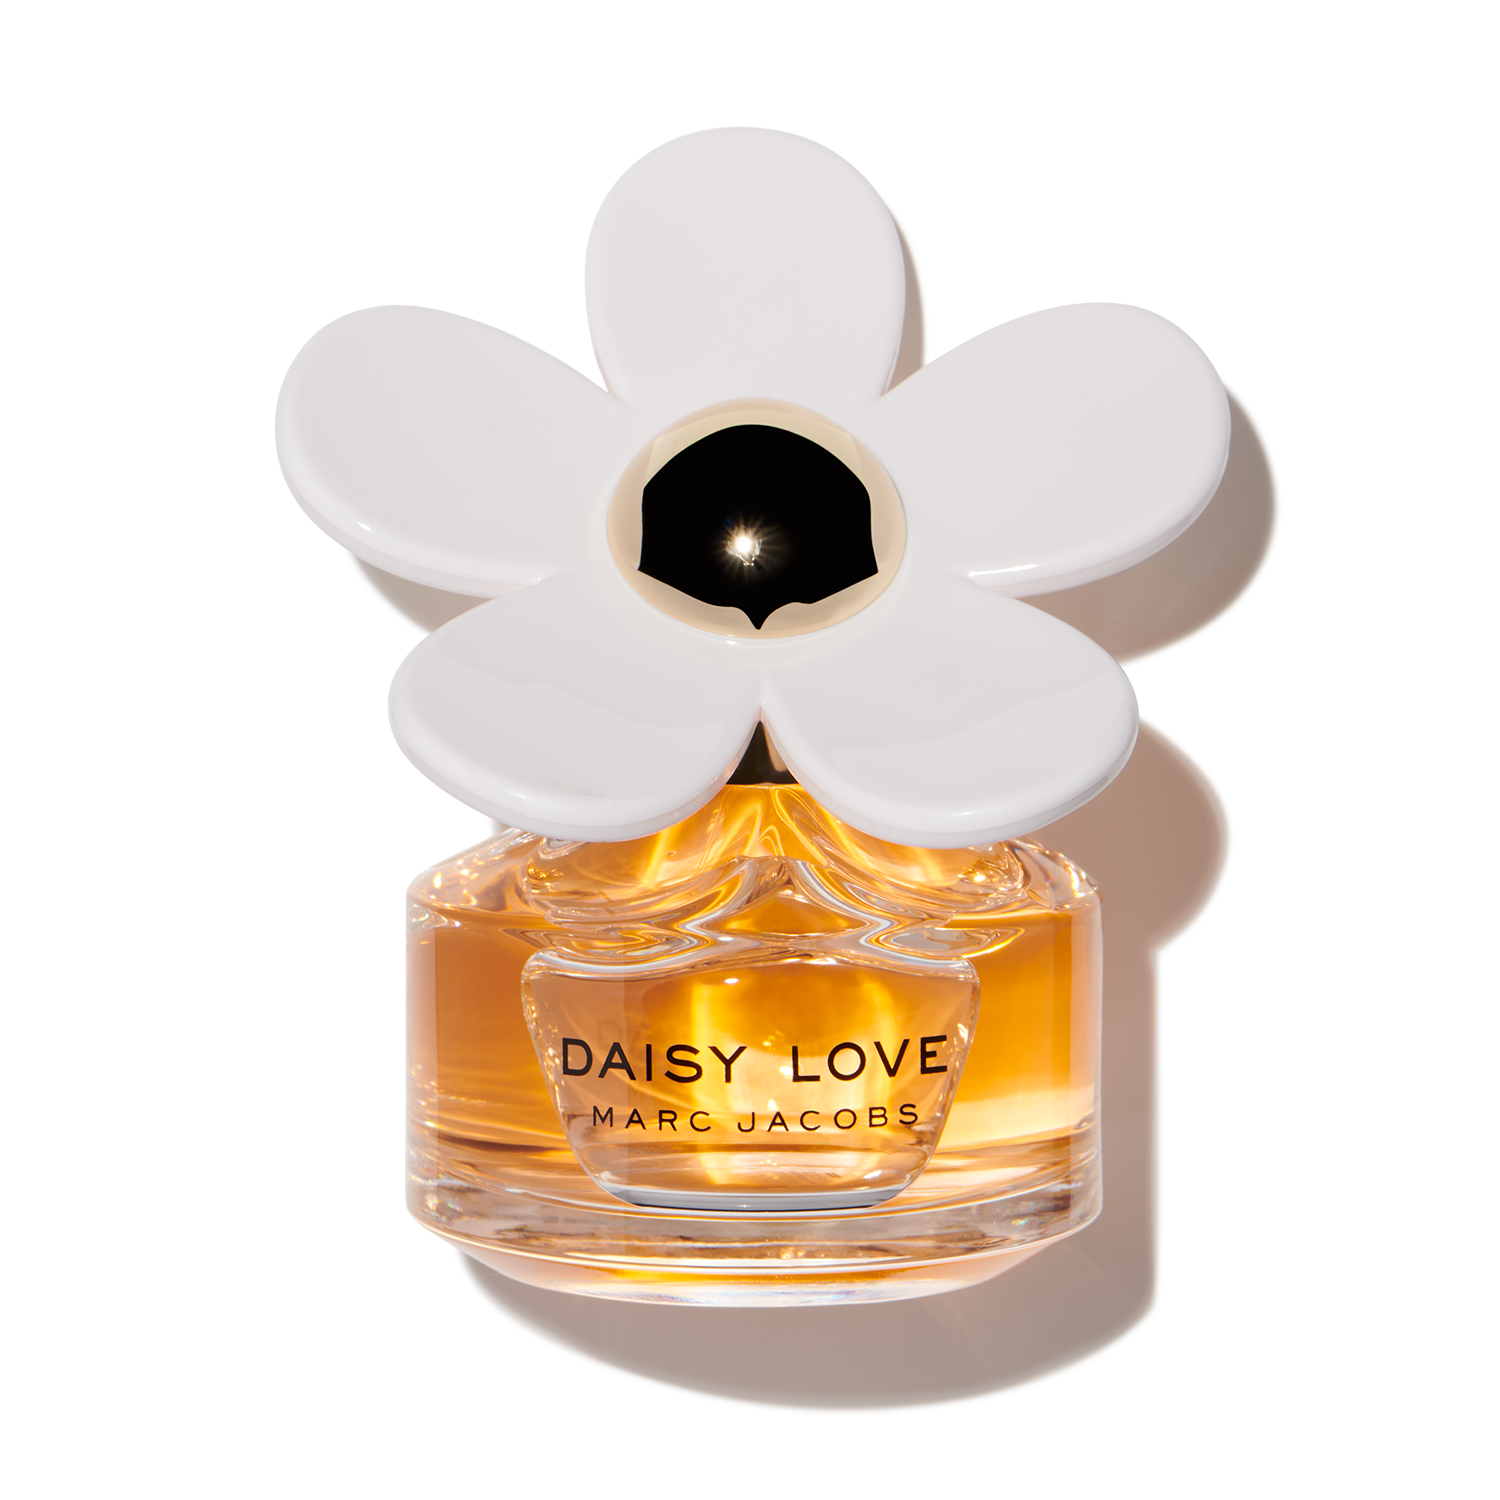 Buy MARC JACOBS Daisy Love perfume at Scentbird for